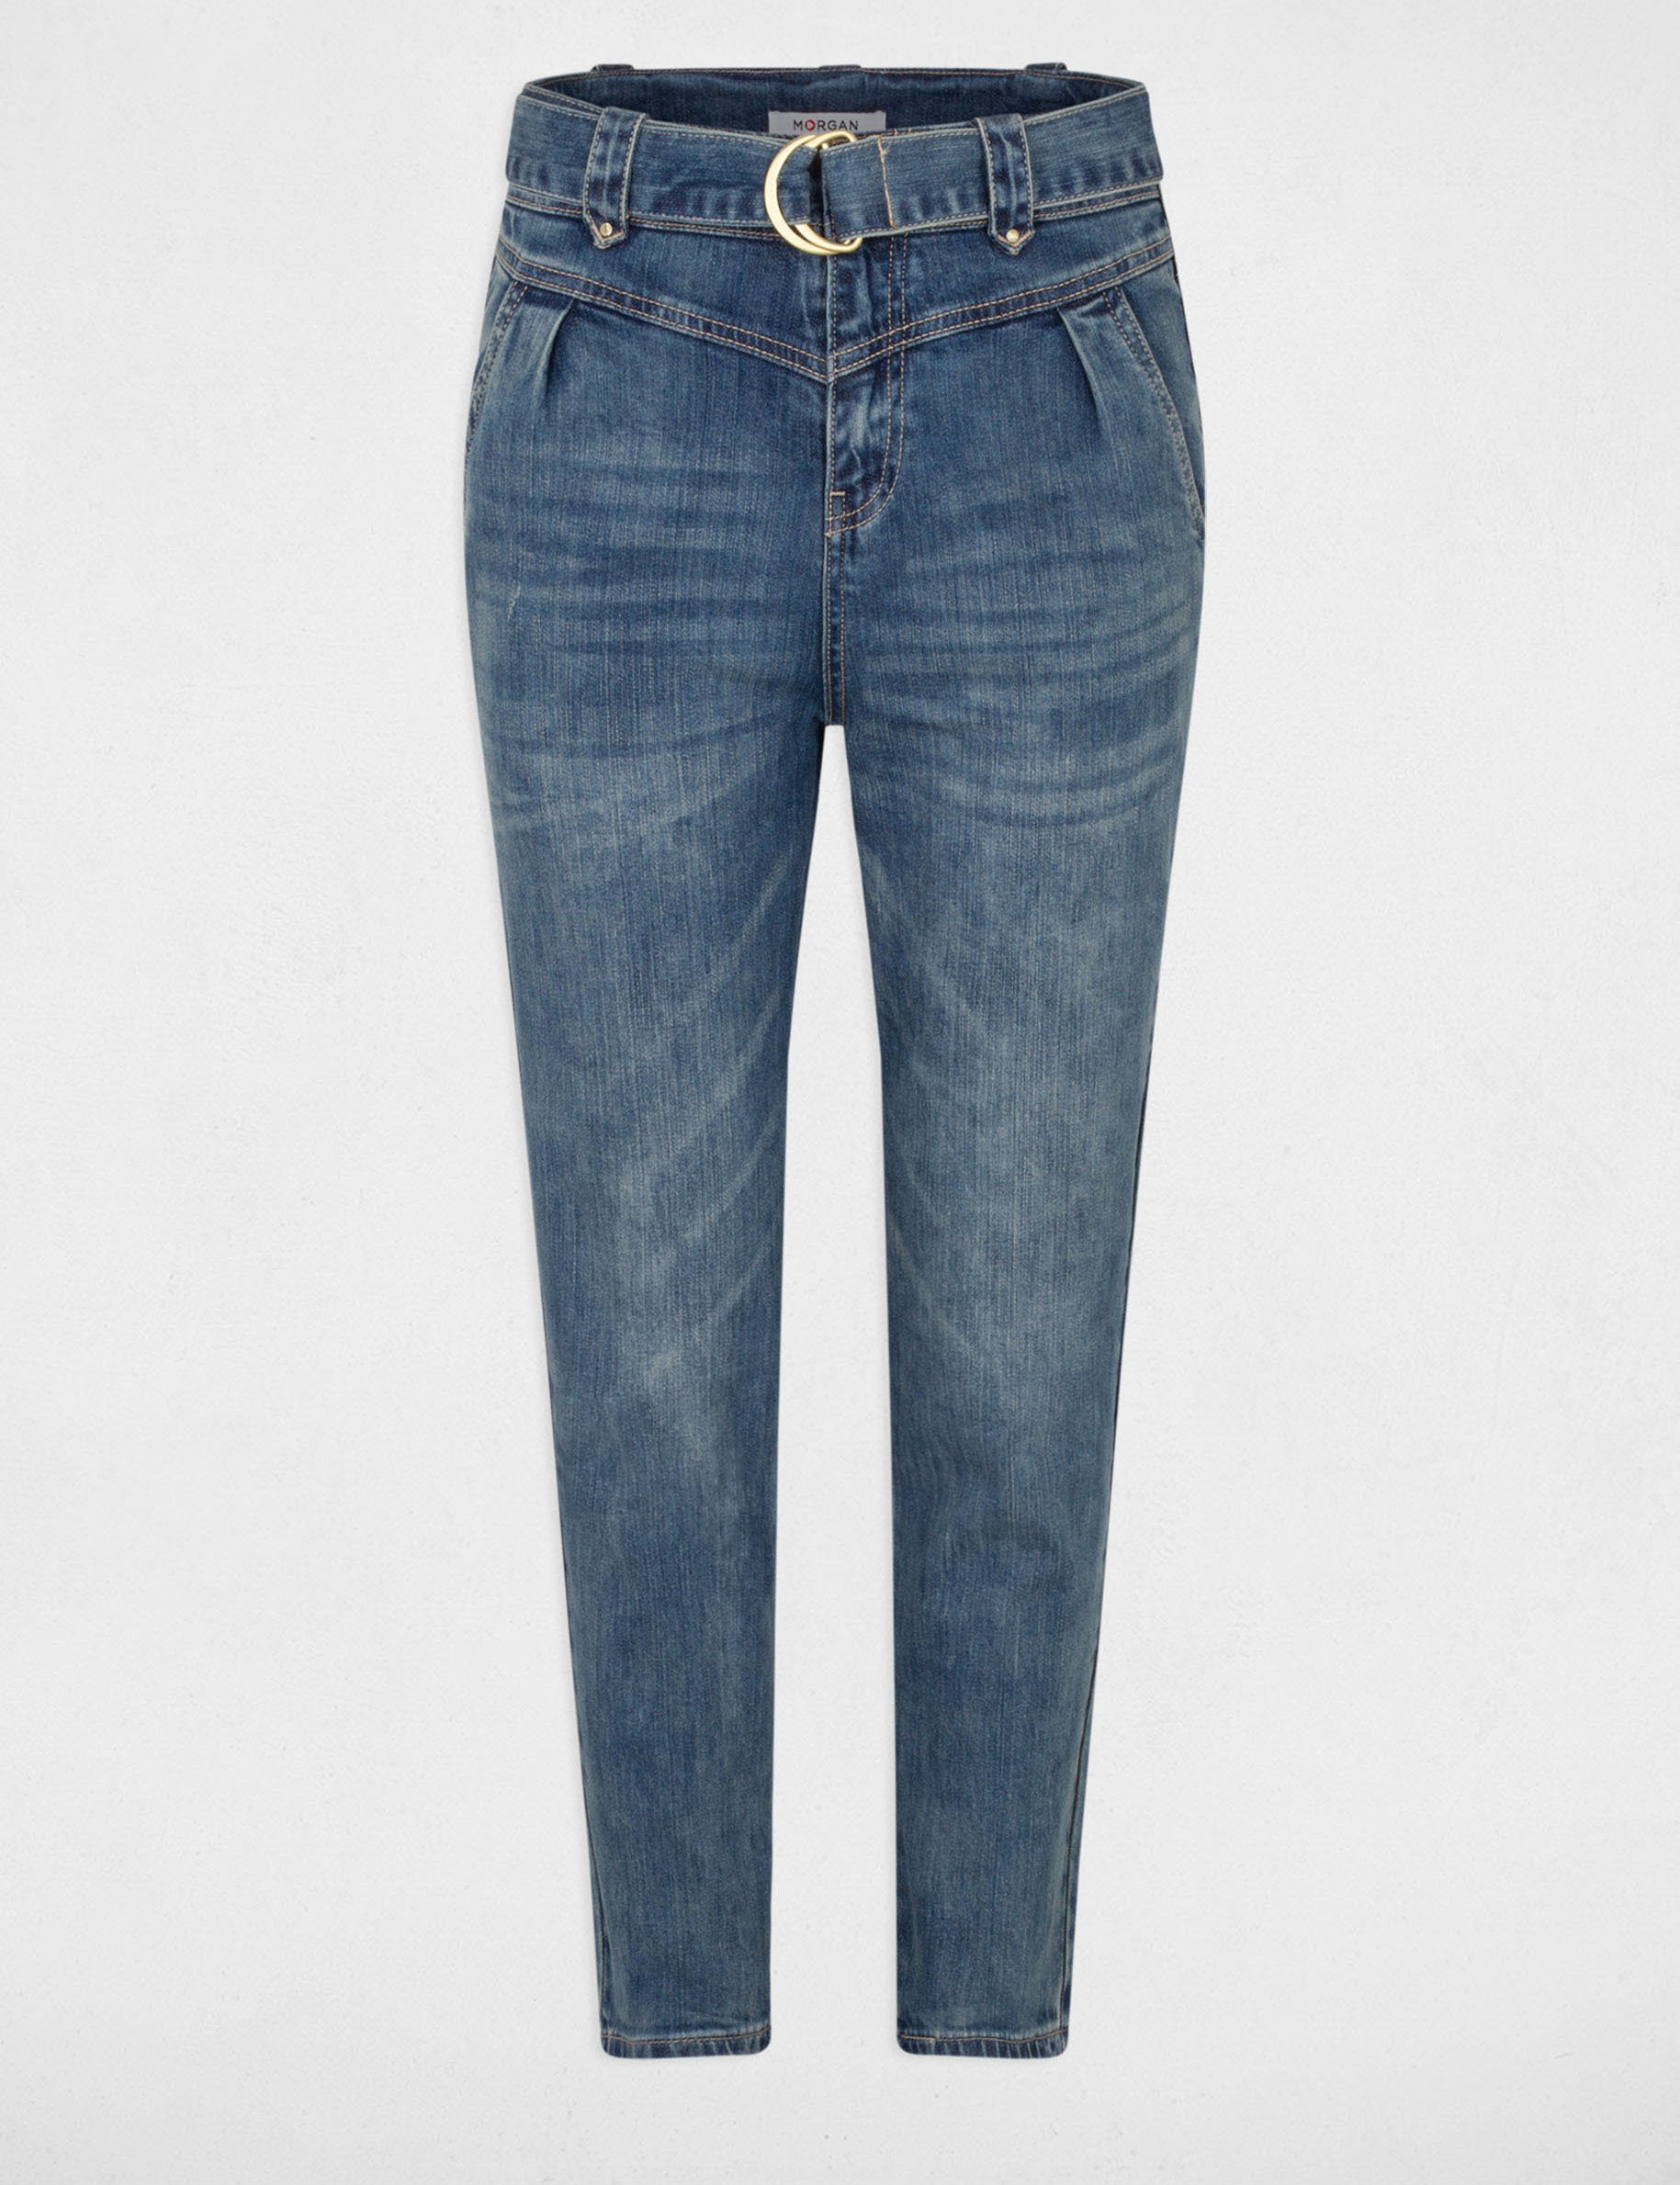 Normale 7/8e jeans met riem jean stone vrouw